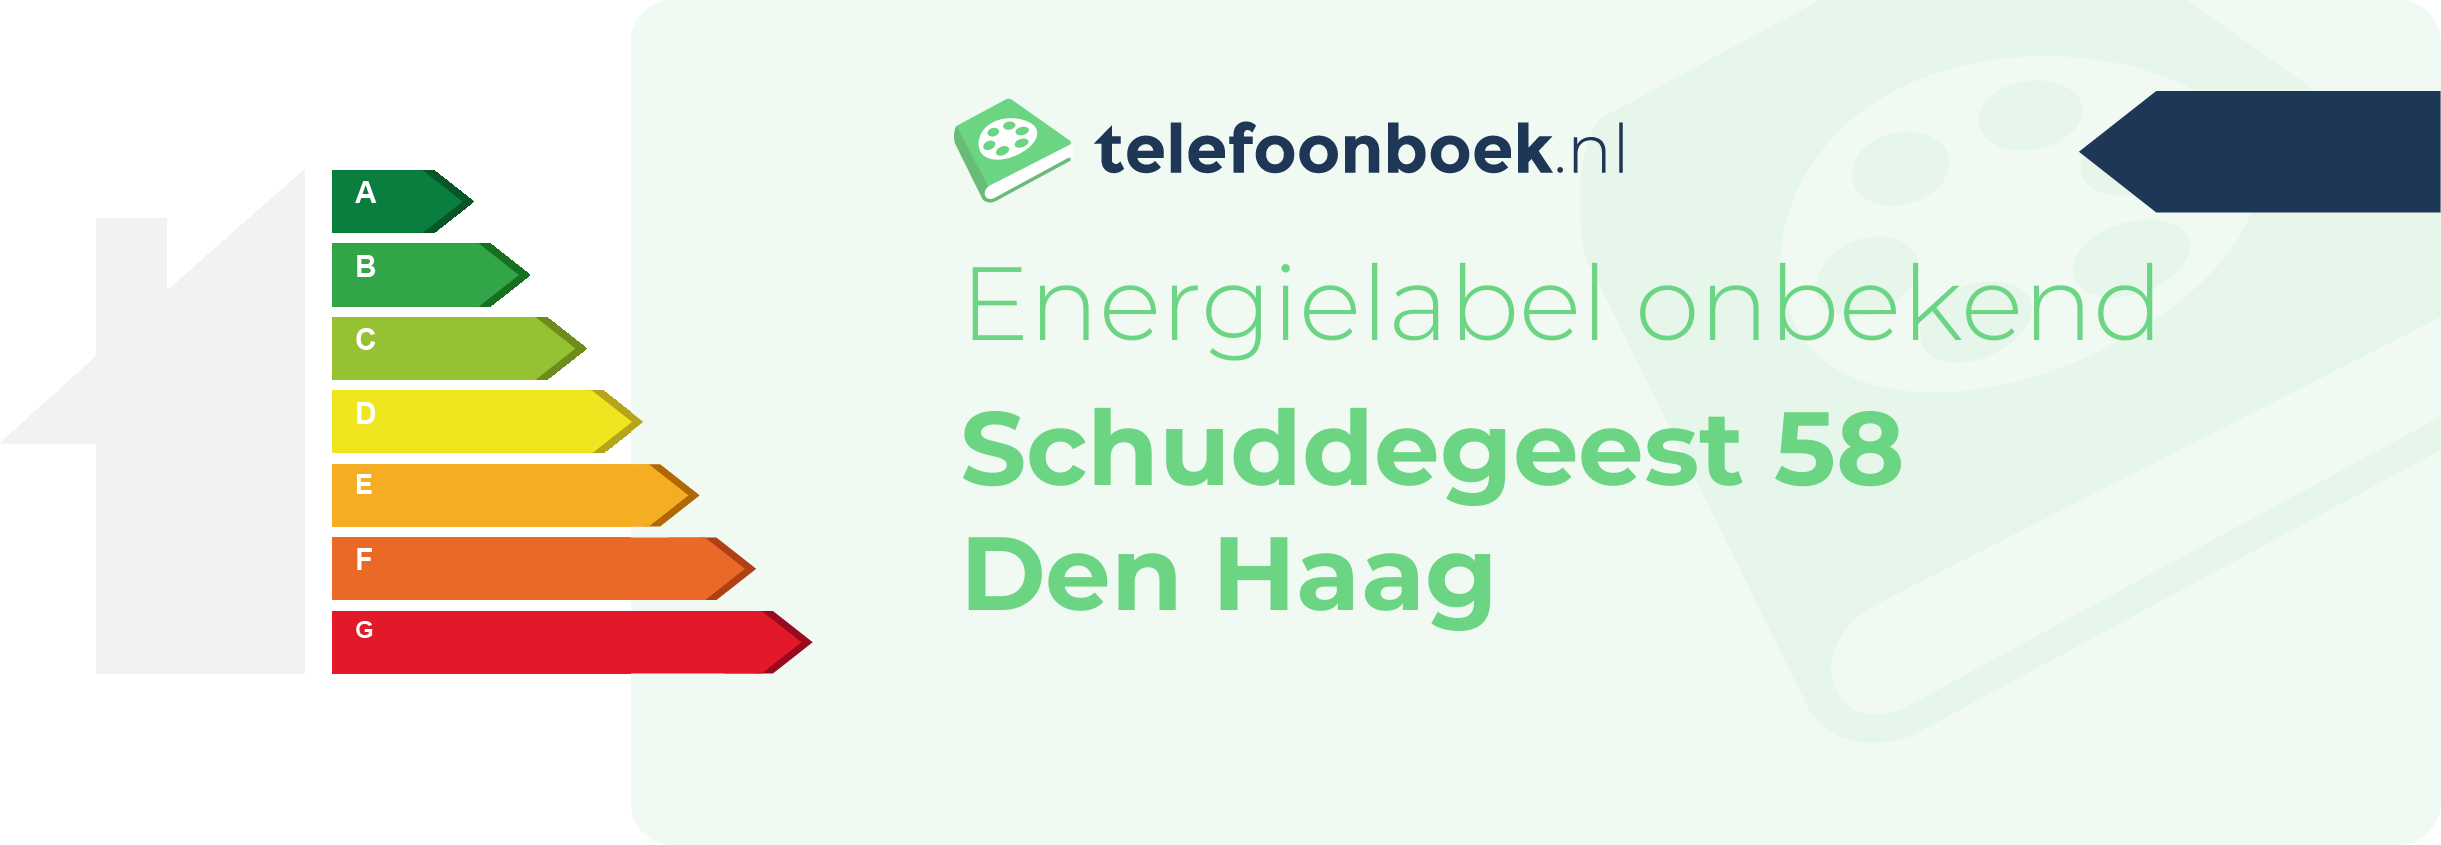 Energielabel Schuddegeest 58 Den Haag